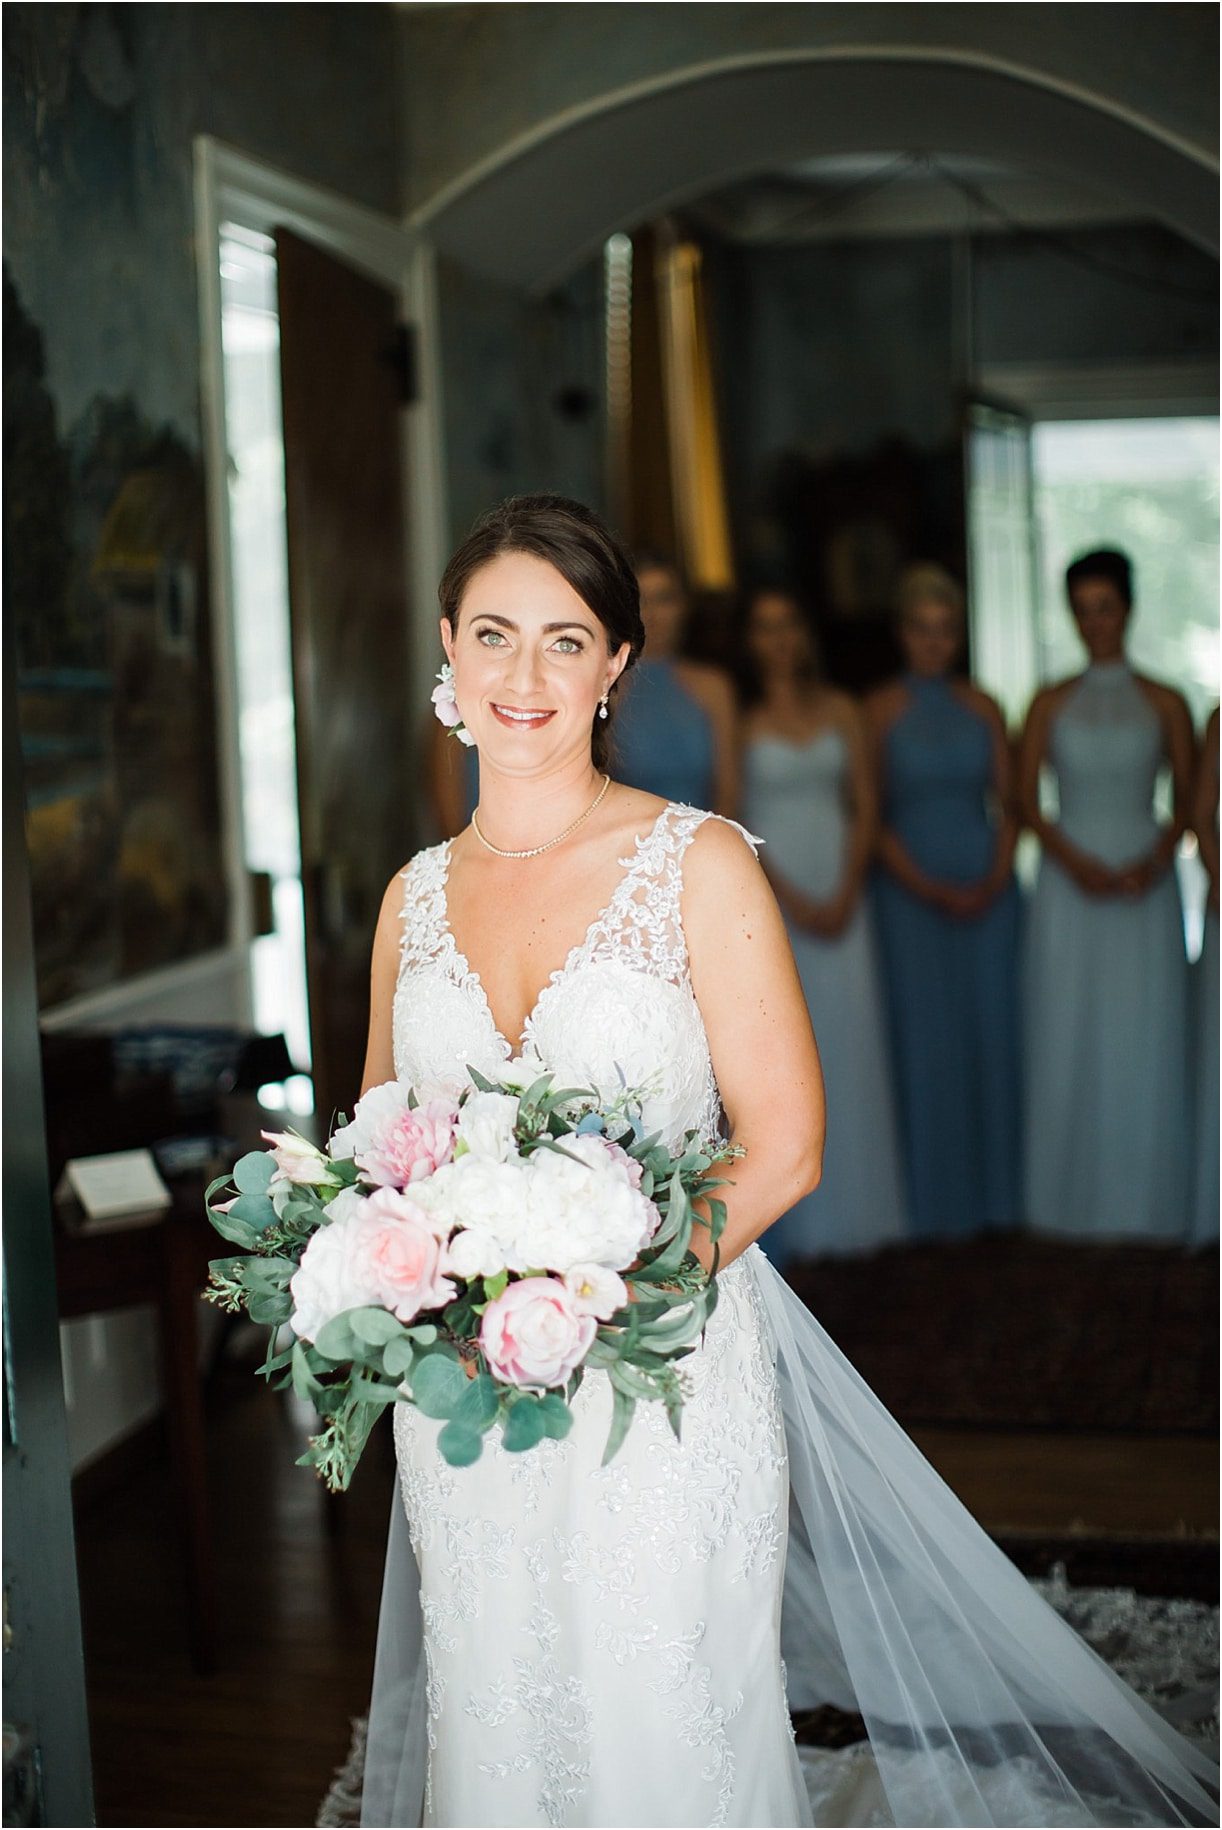 Cape Charles Wedding Venues | Blue Wedding | Hill City Bride Virginia Weddings Blog | Wedding Bouquet